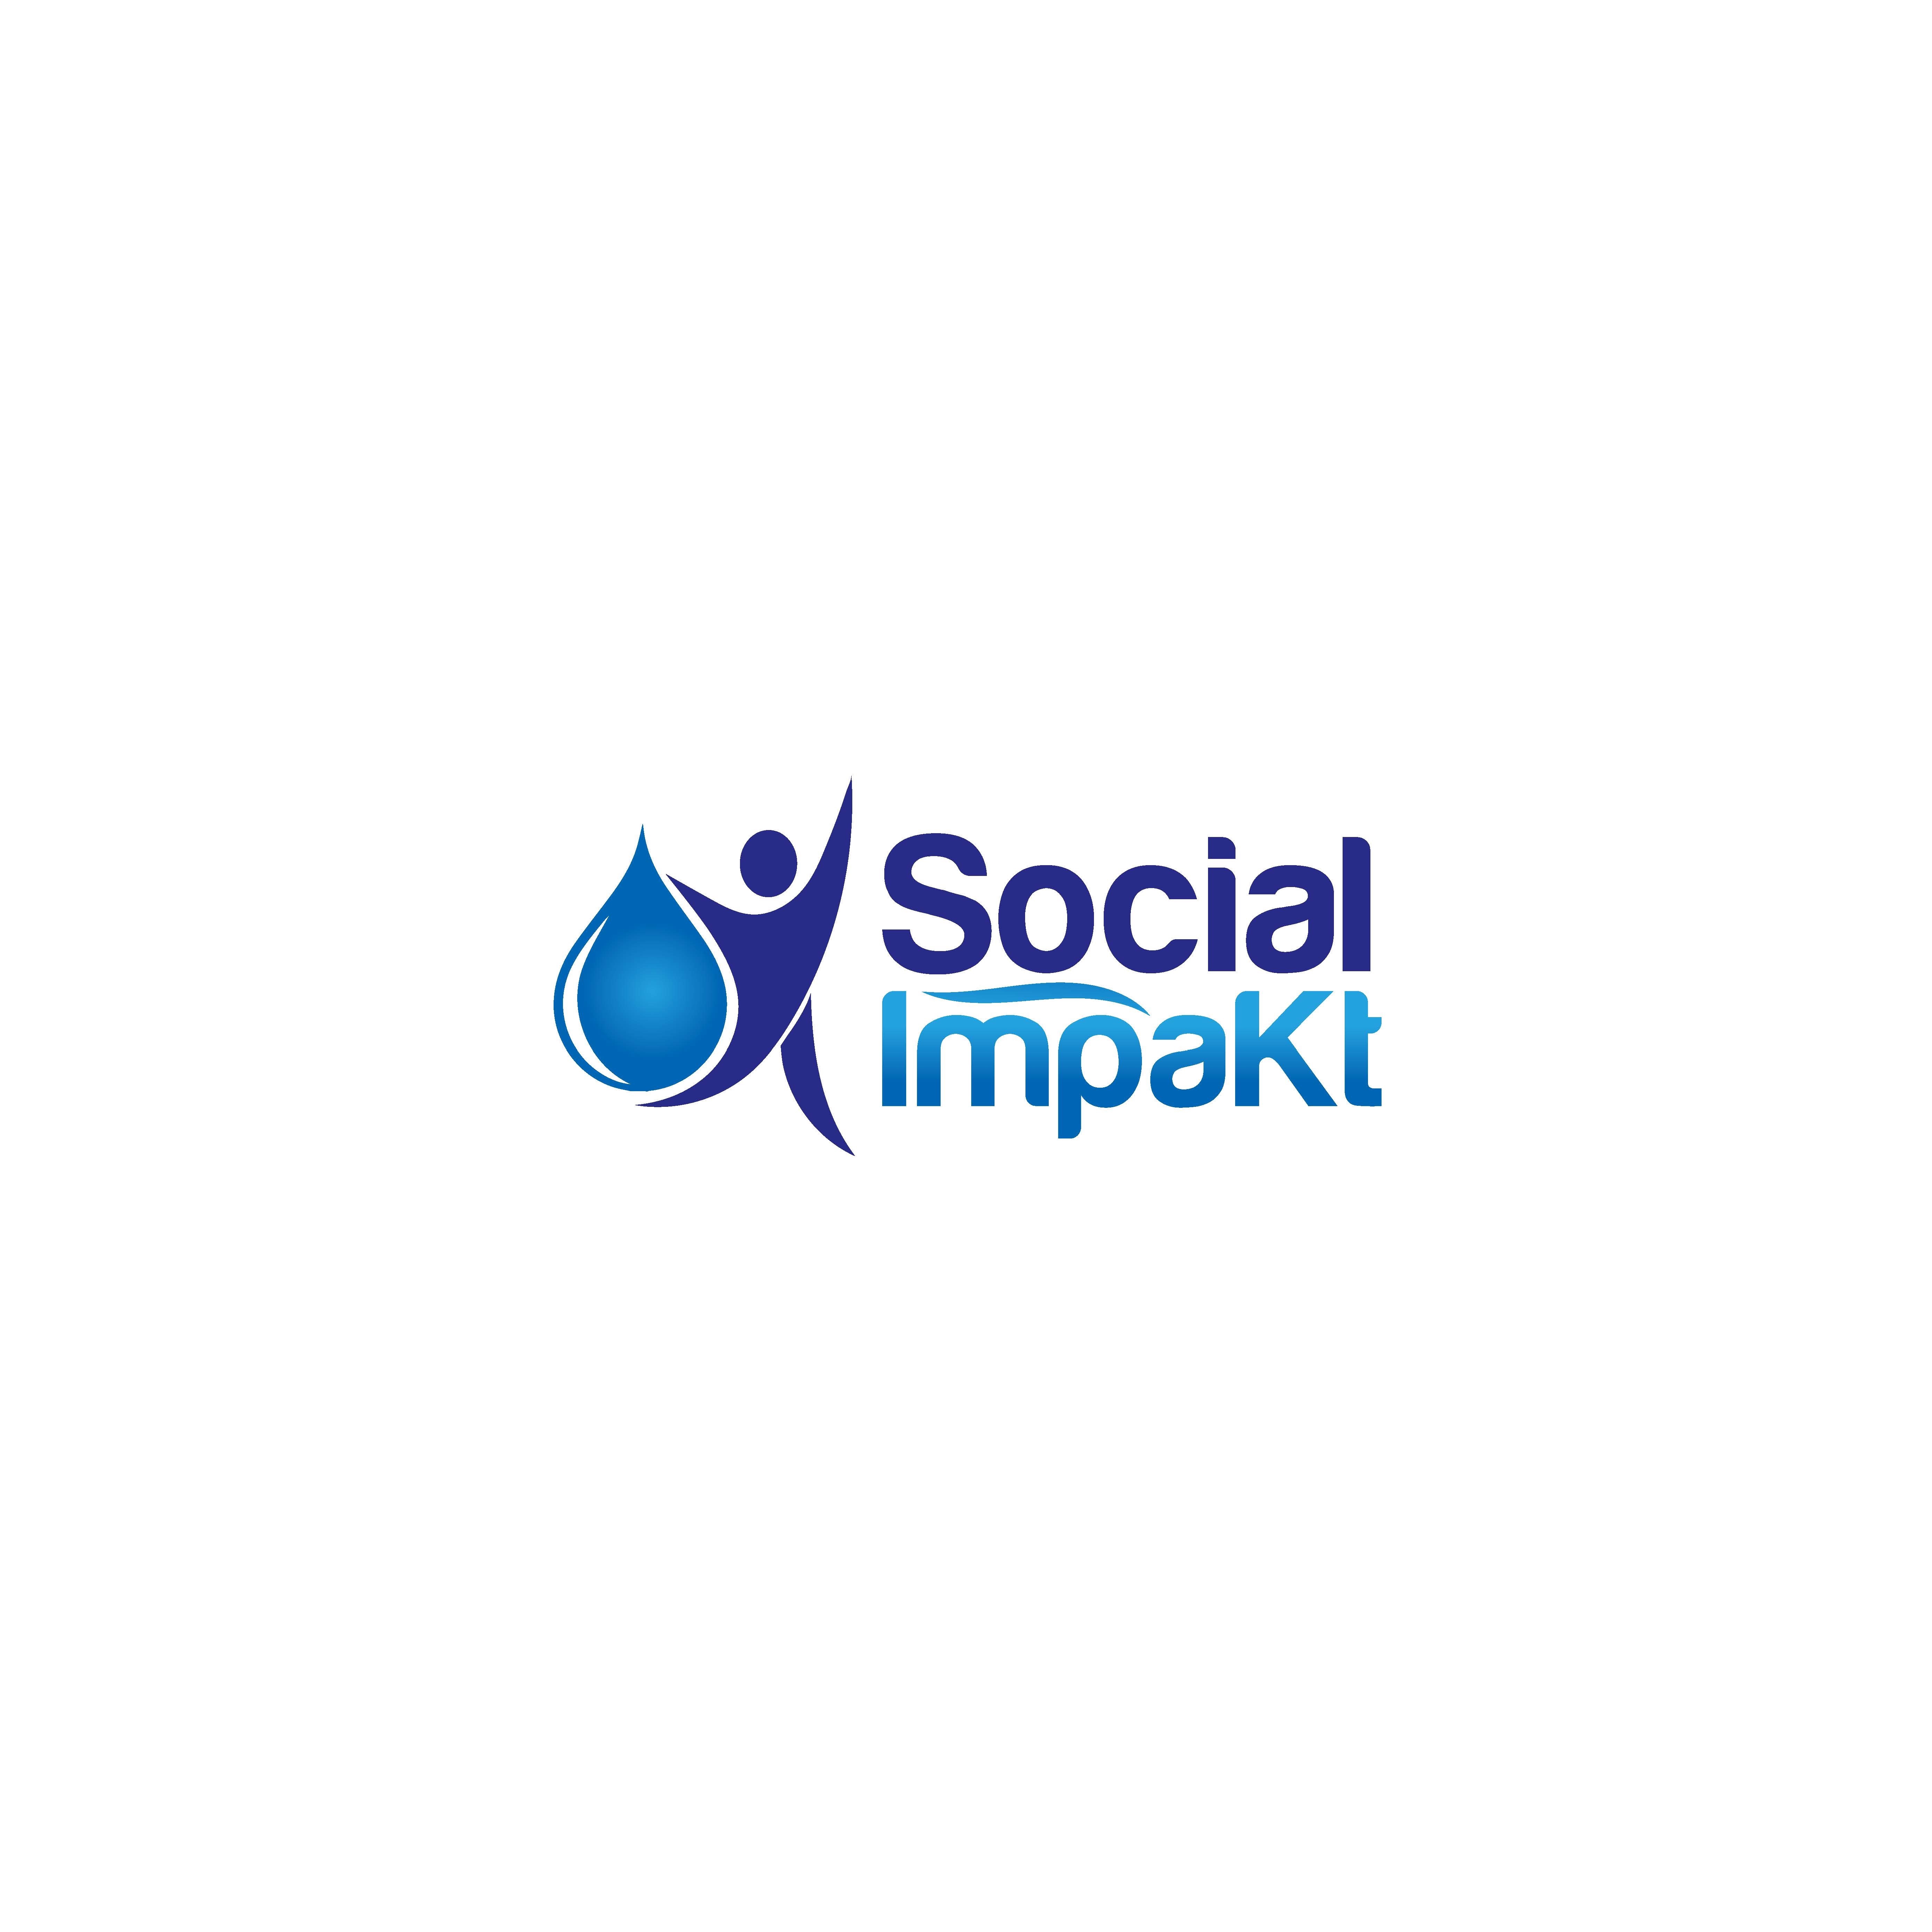 Social Impakt logo